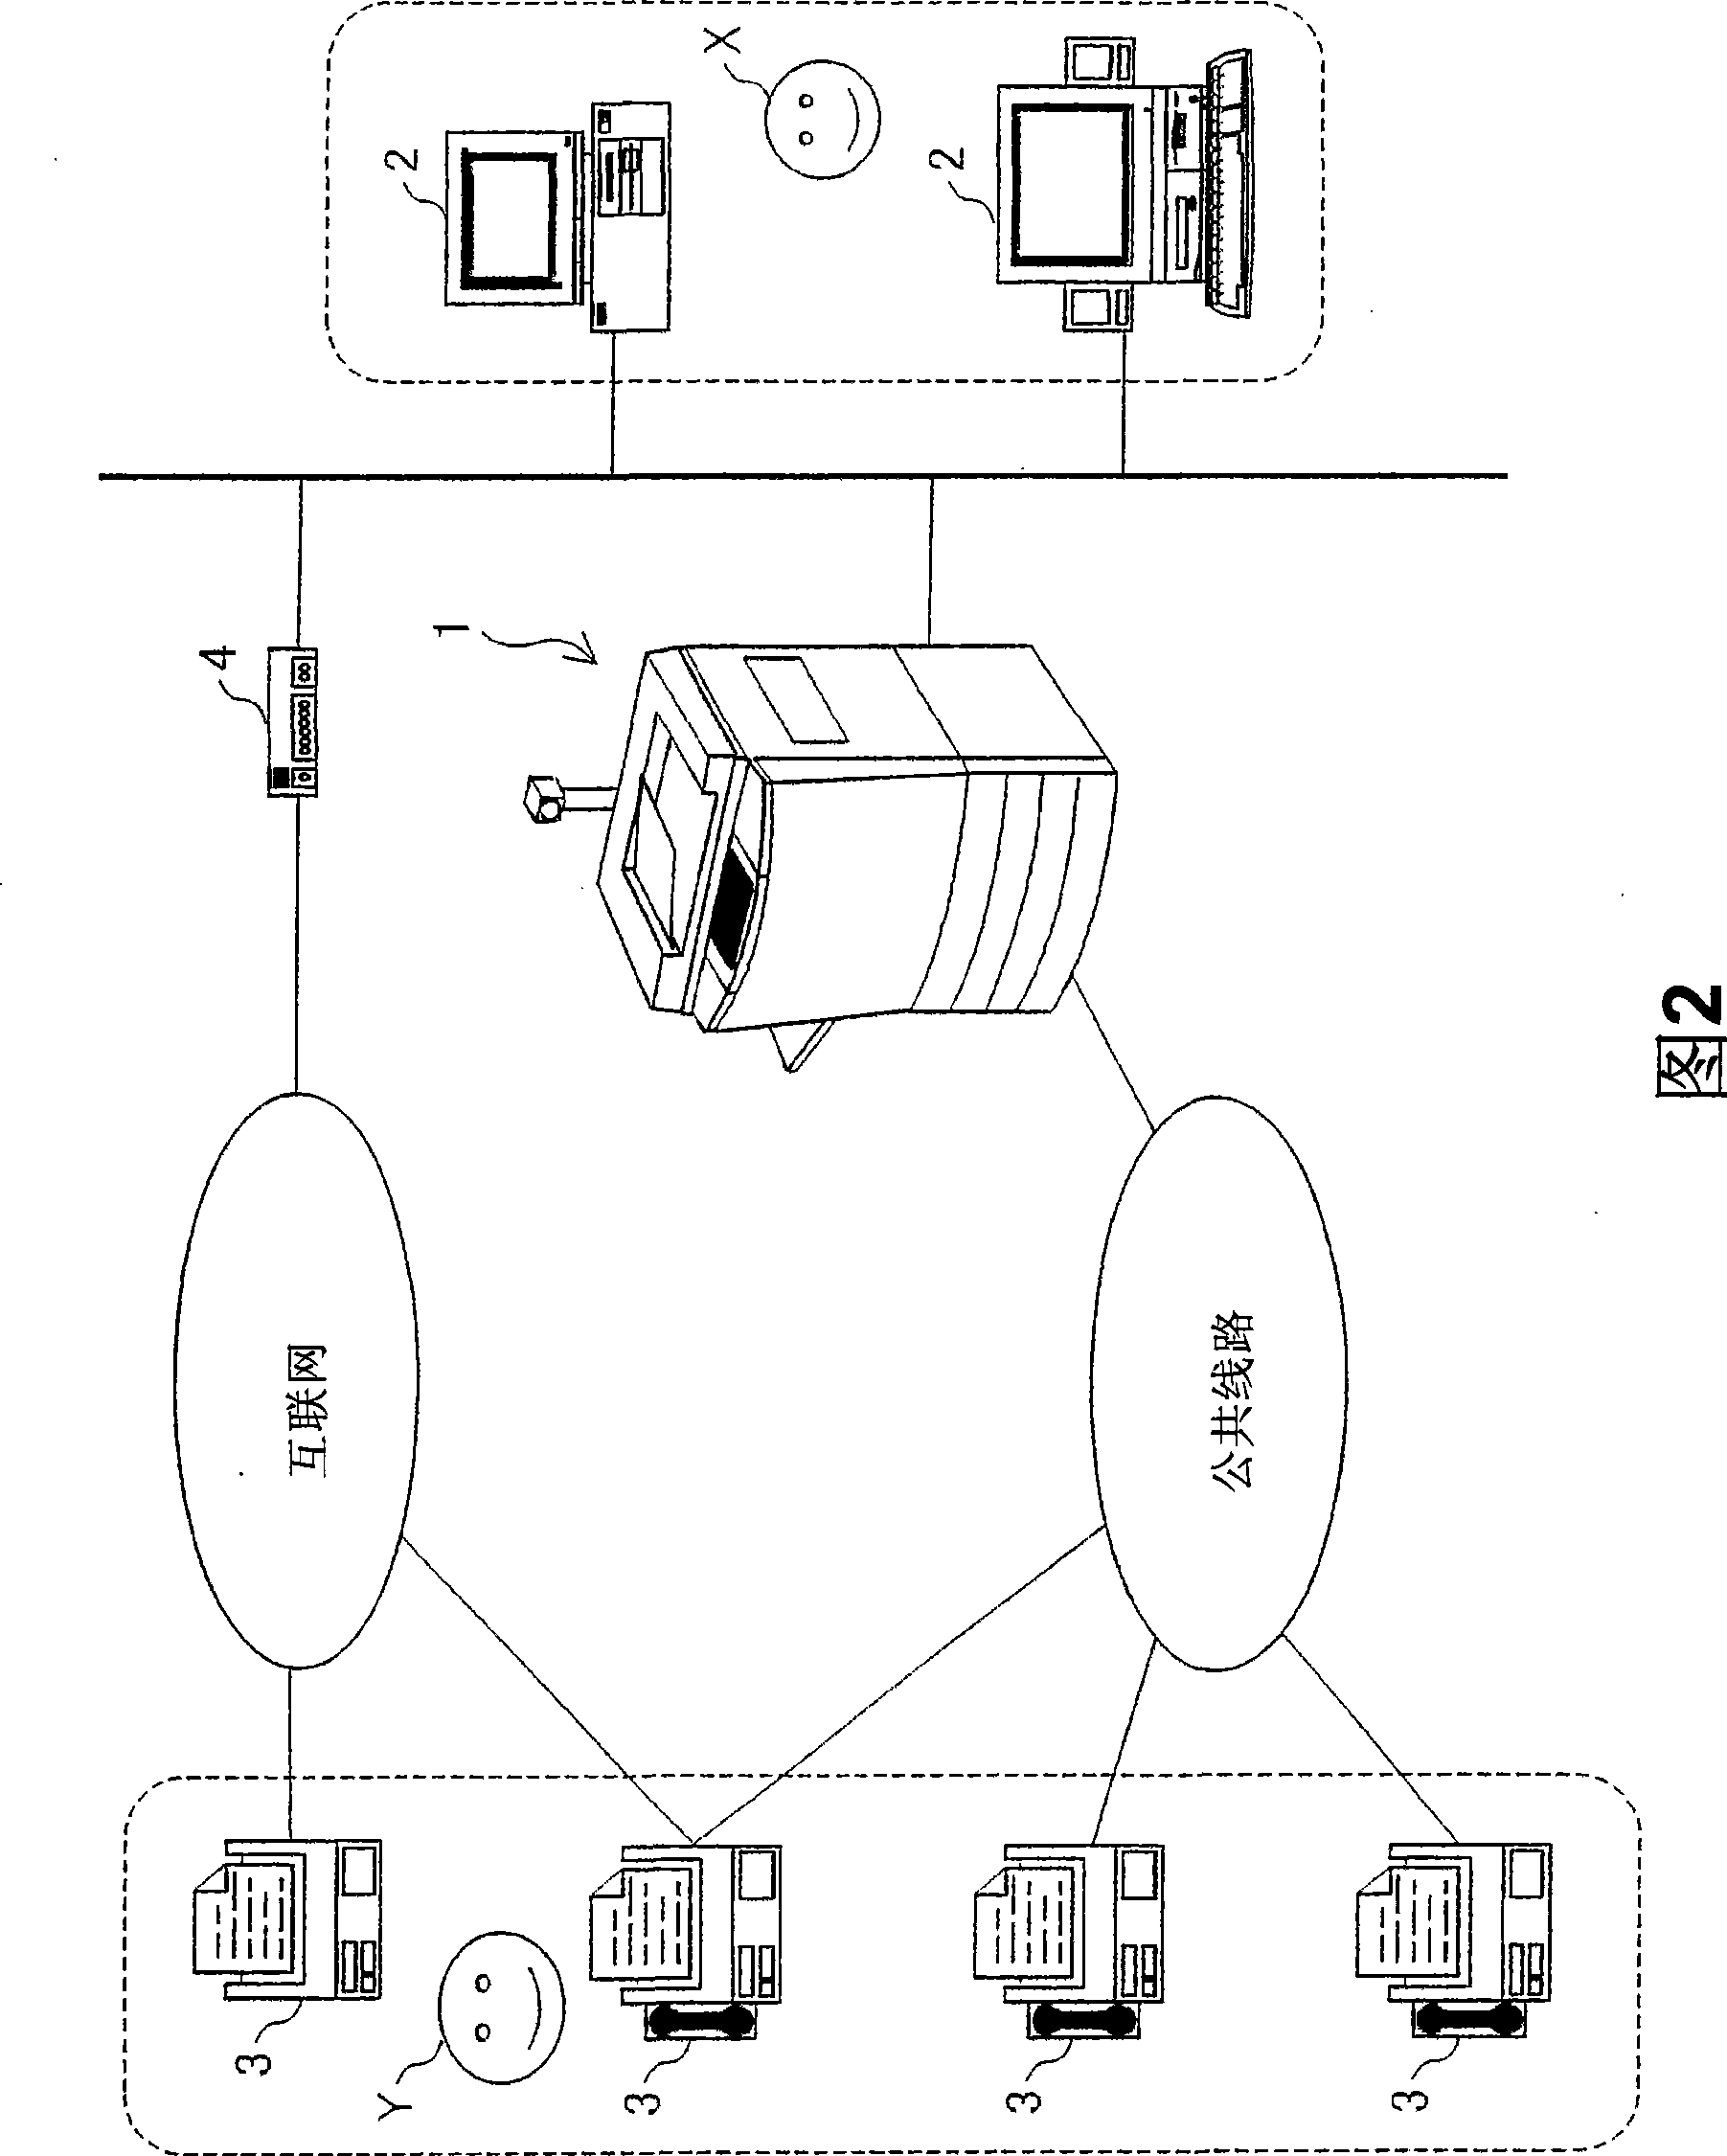 Control device, image forming apparatus, method of controlling image forming apparatus, and recording medium